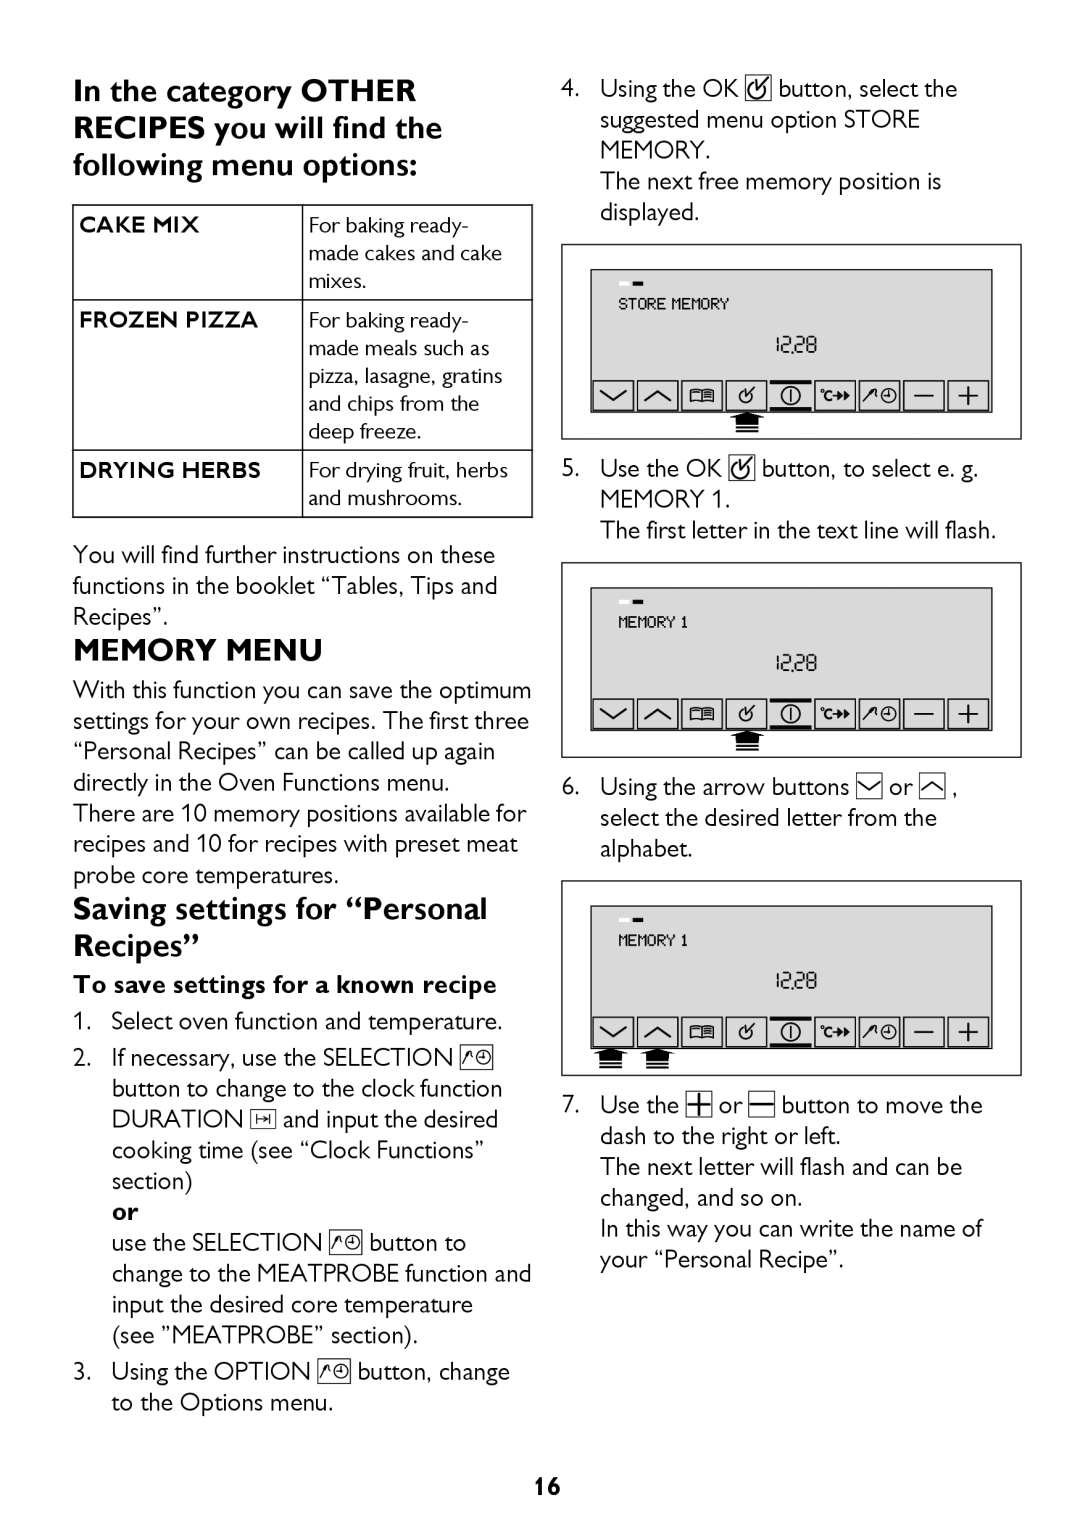 John Lewis JLBIOS610 Memory Menu, Saving settings for “Personal Recipes”, To save settings for a known recipe 